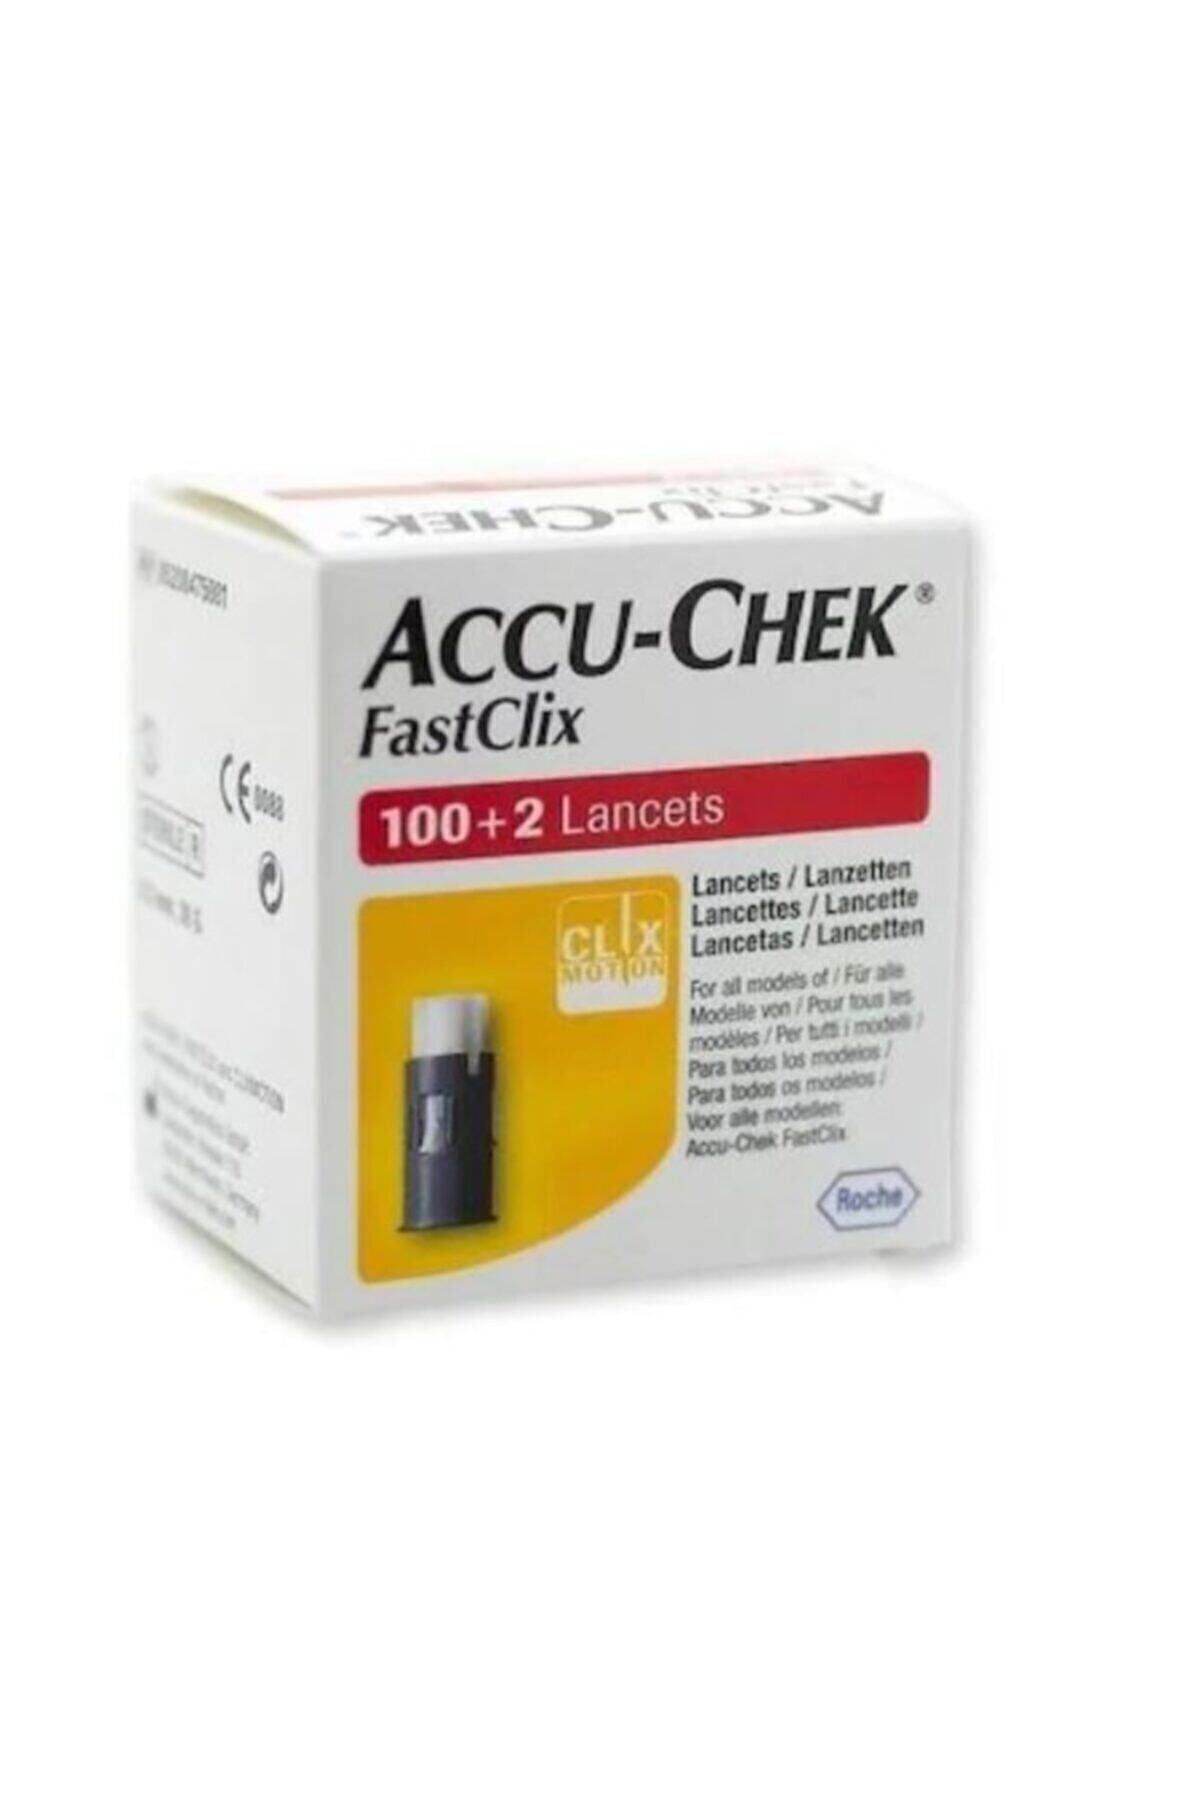 Roche Accu-chek Fastclix 102 Lancet